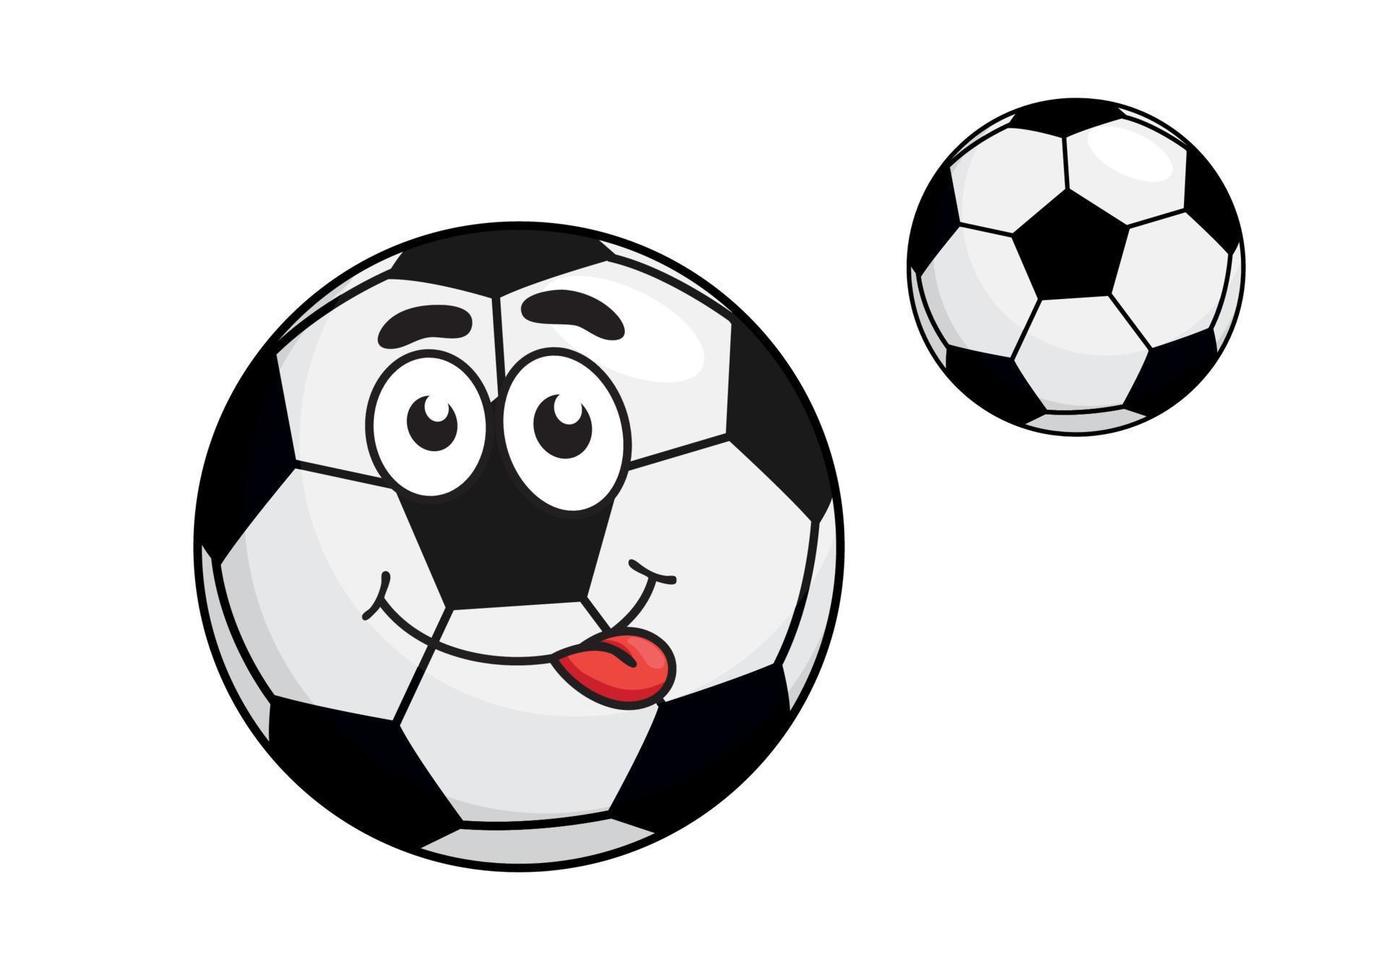 lindo balón de fútbol de dibujos animados con una lengua protuberante vector